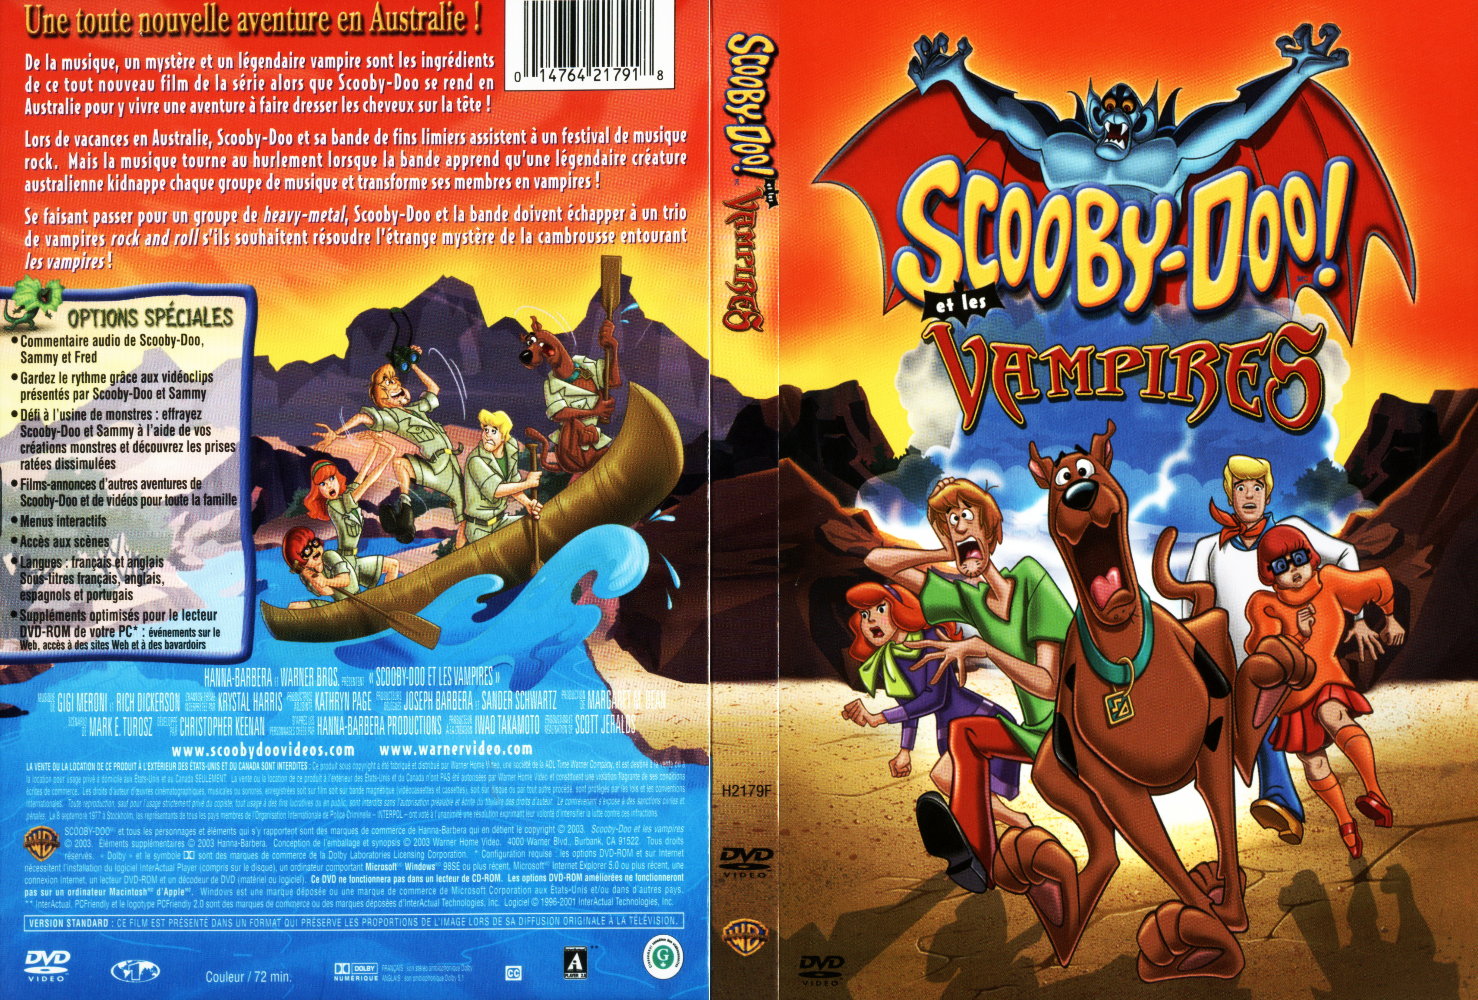 Jaquette DVD Scooby-doo et les vampire